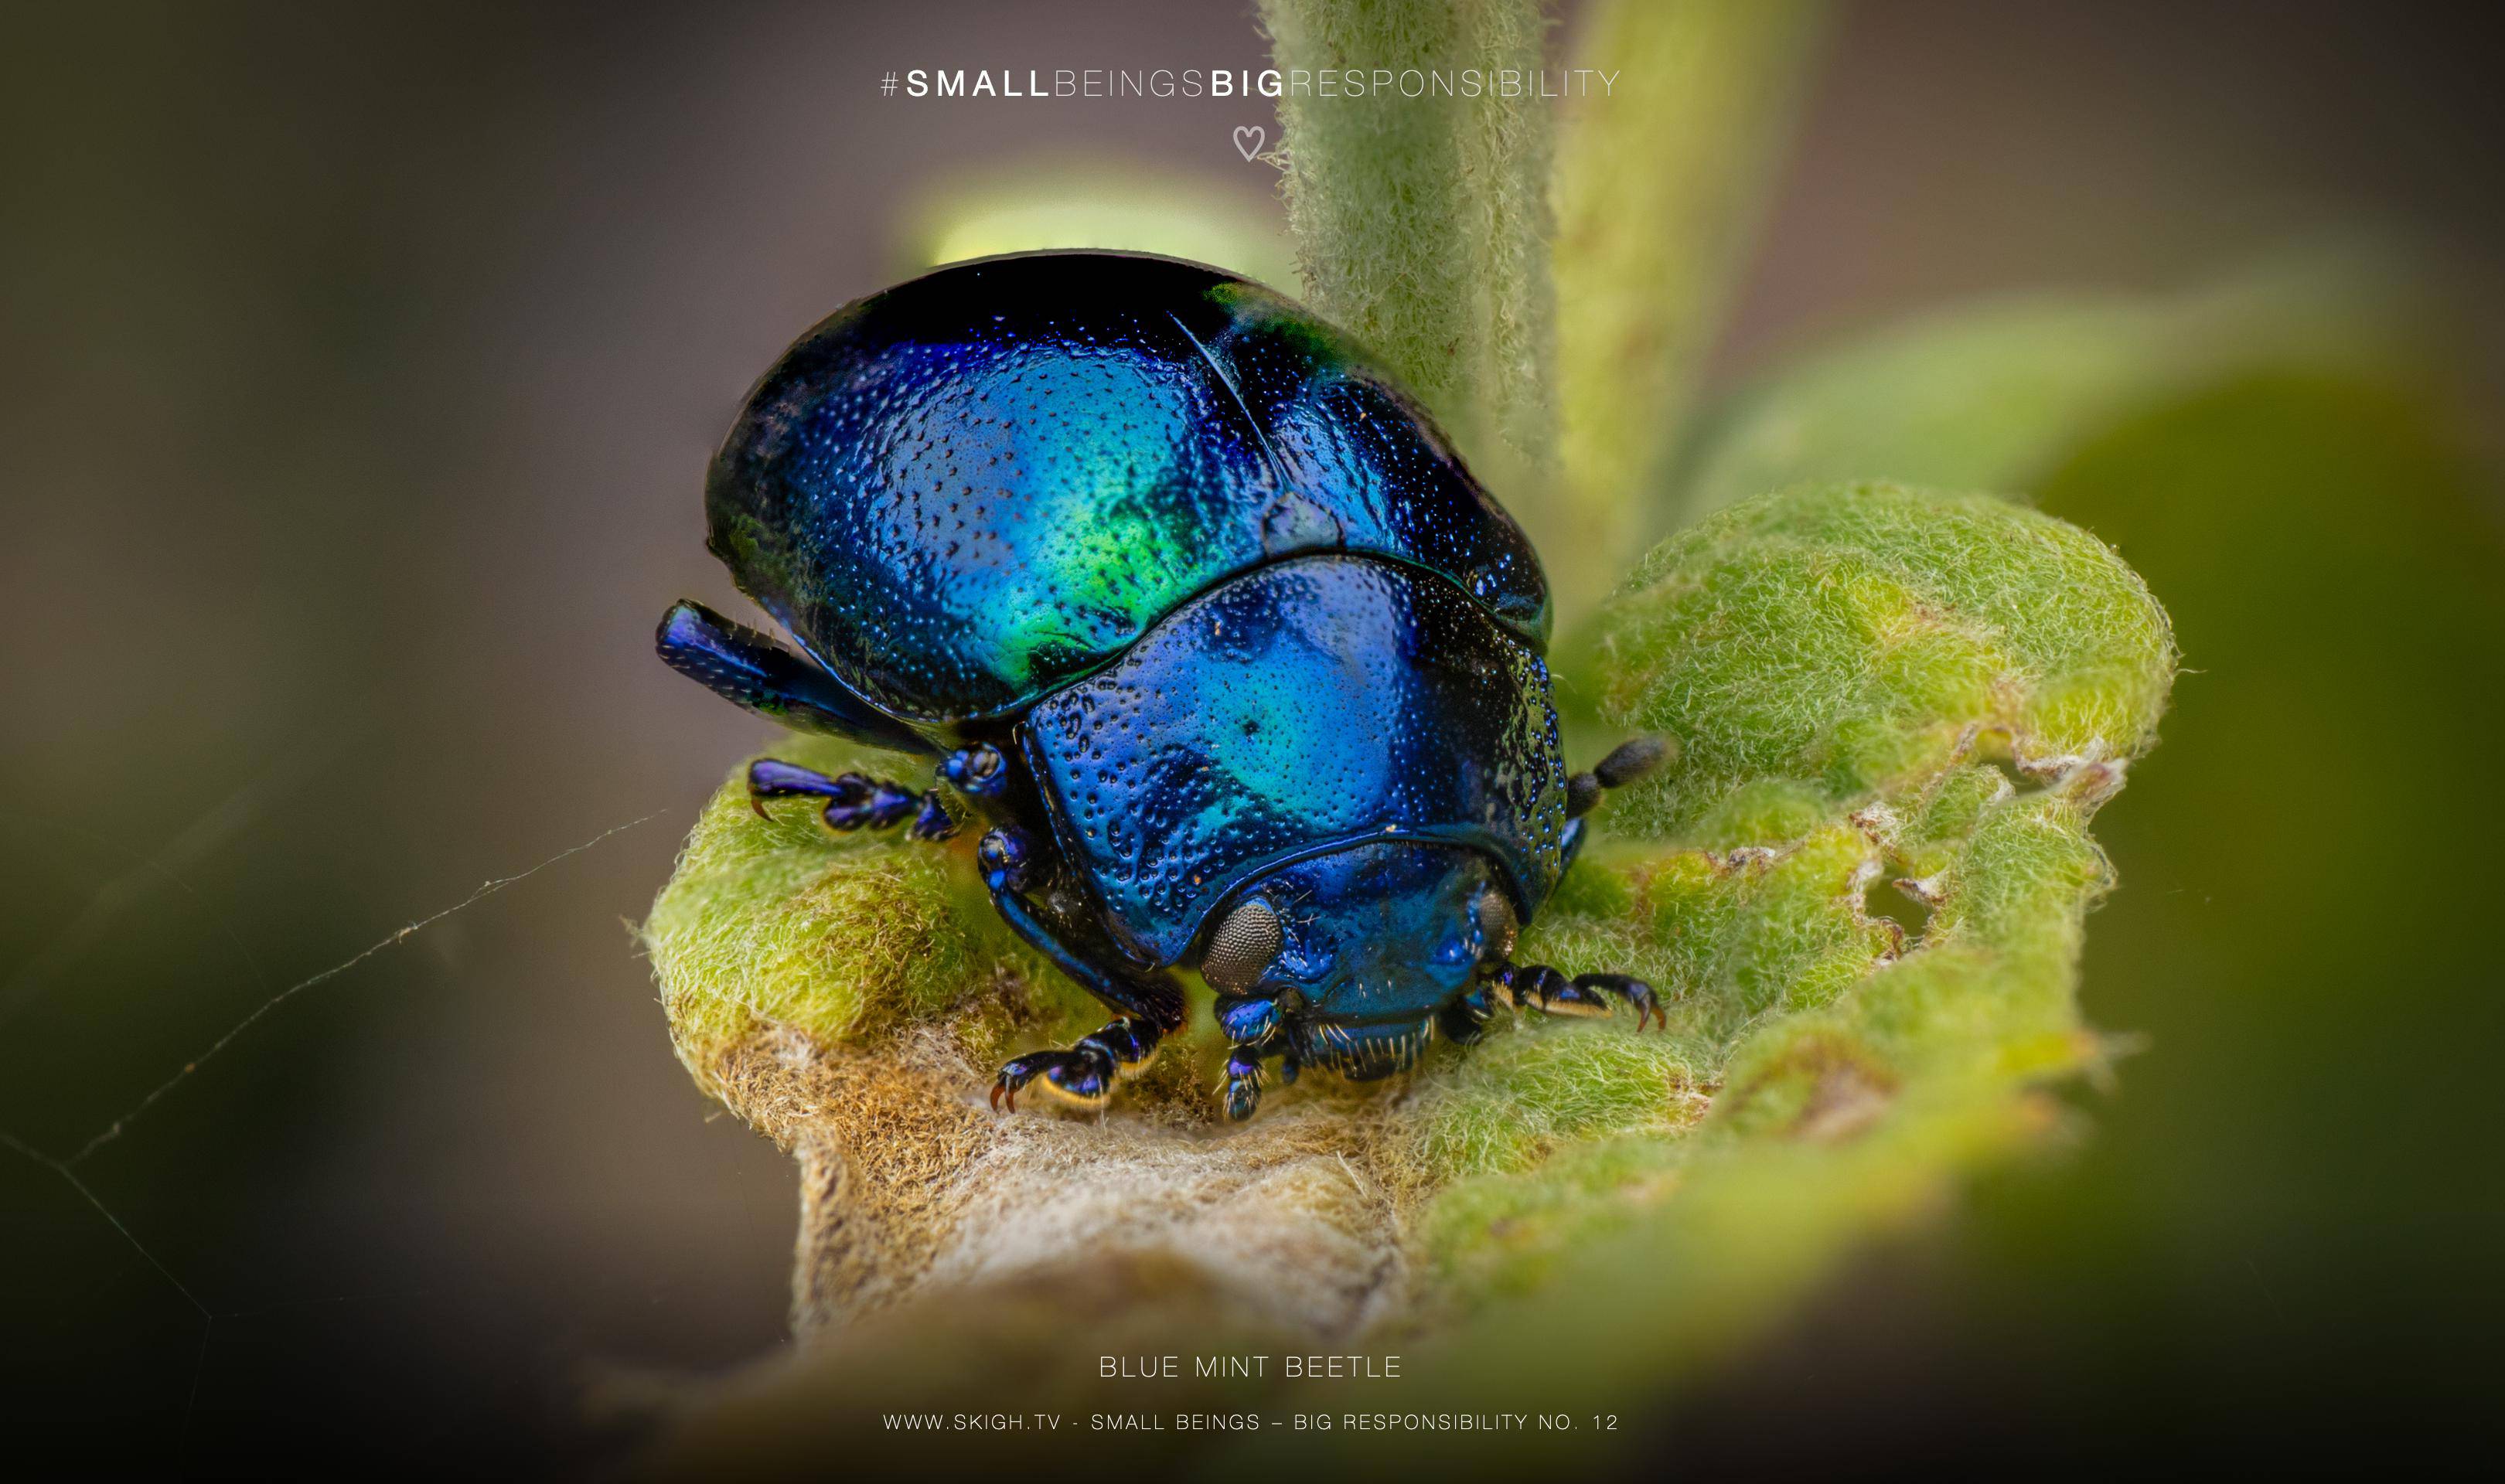 Blue mint beetle